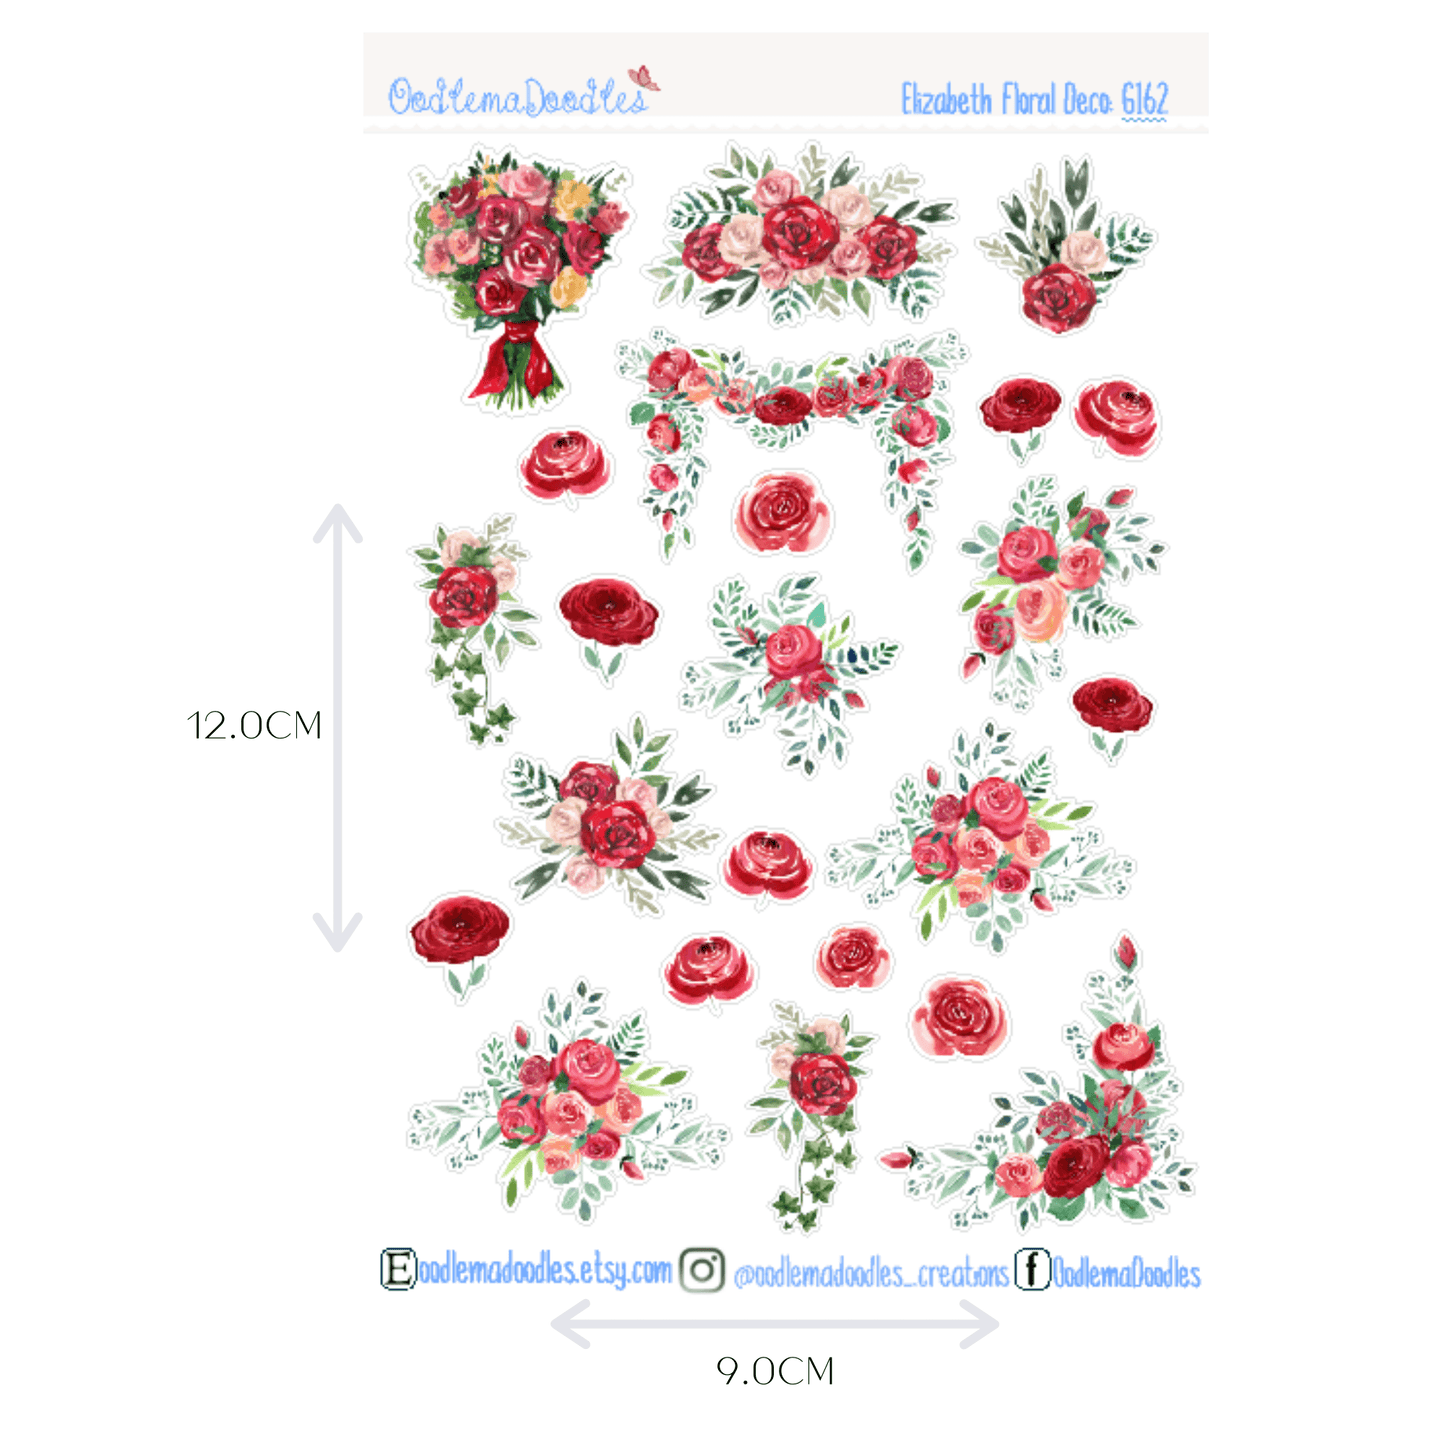 Elizabeth Floral Decorative Stickers - oodlemadoodles